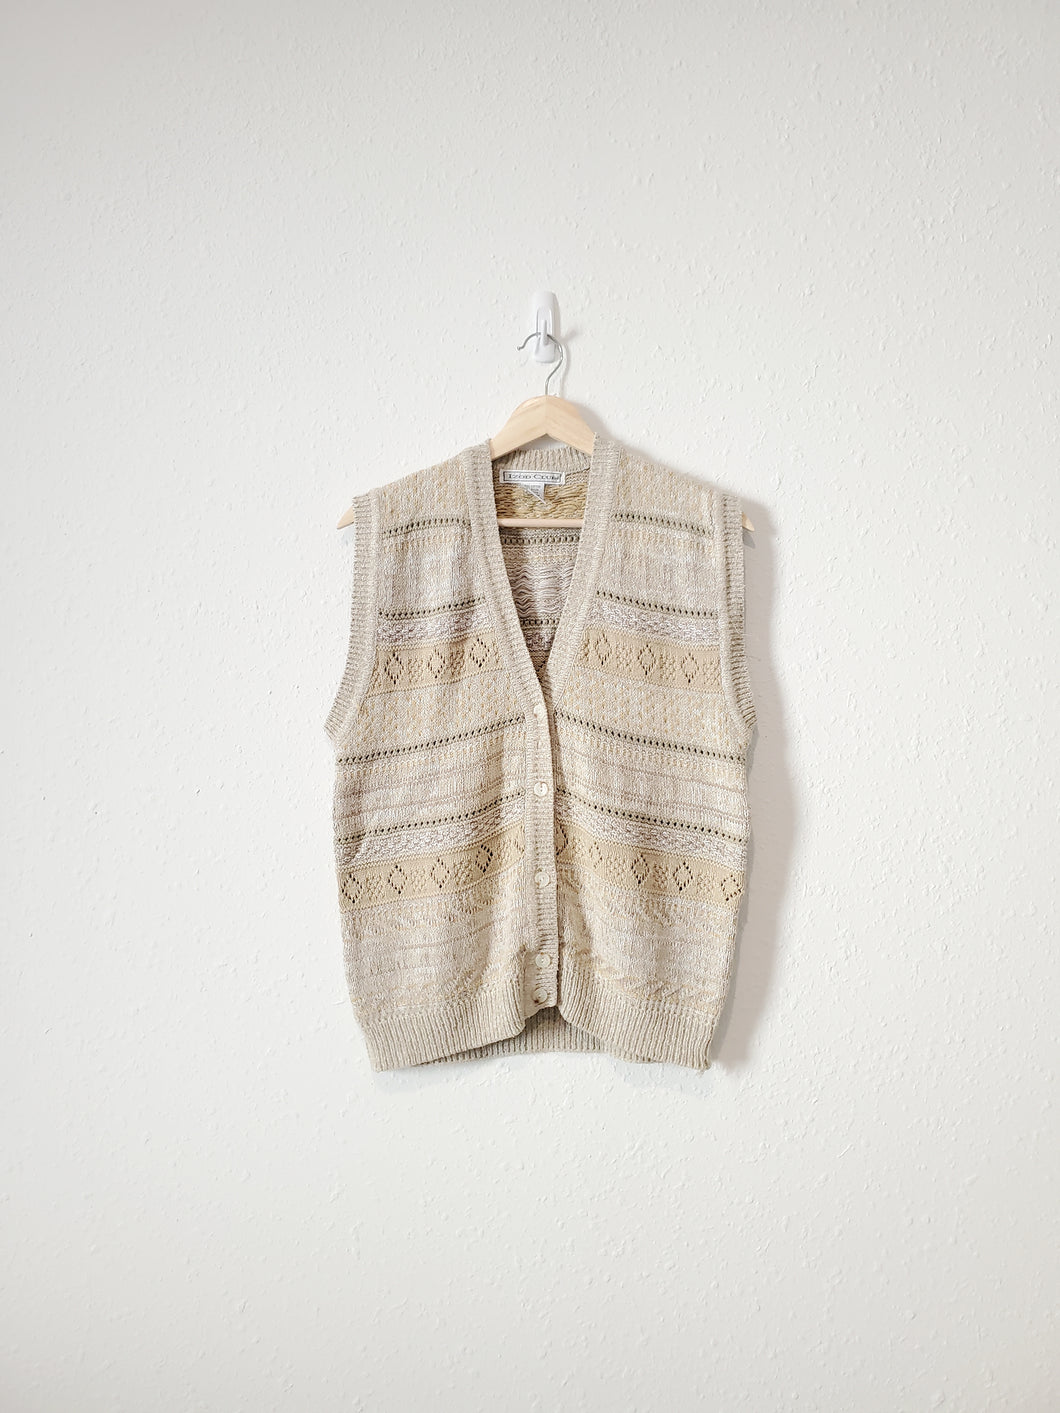 Vintage Textured Sweater Vest (M)